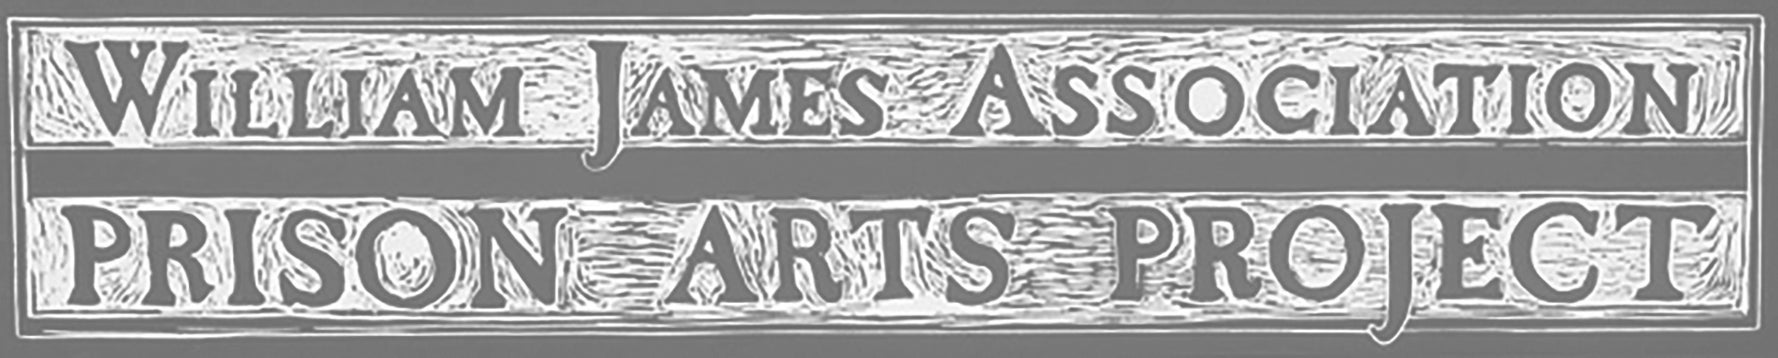 William James Association Prison Arts Project Logo